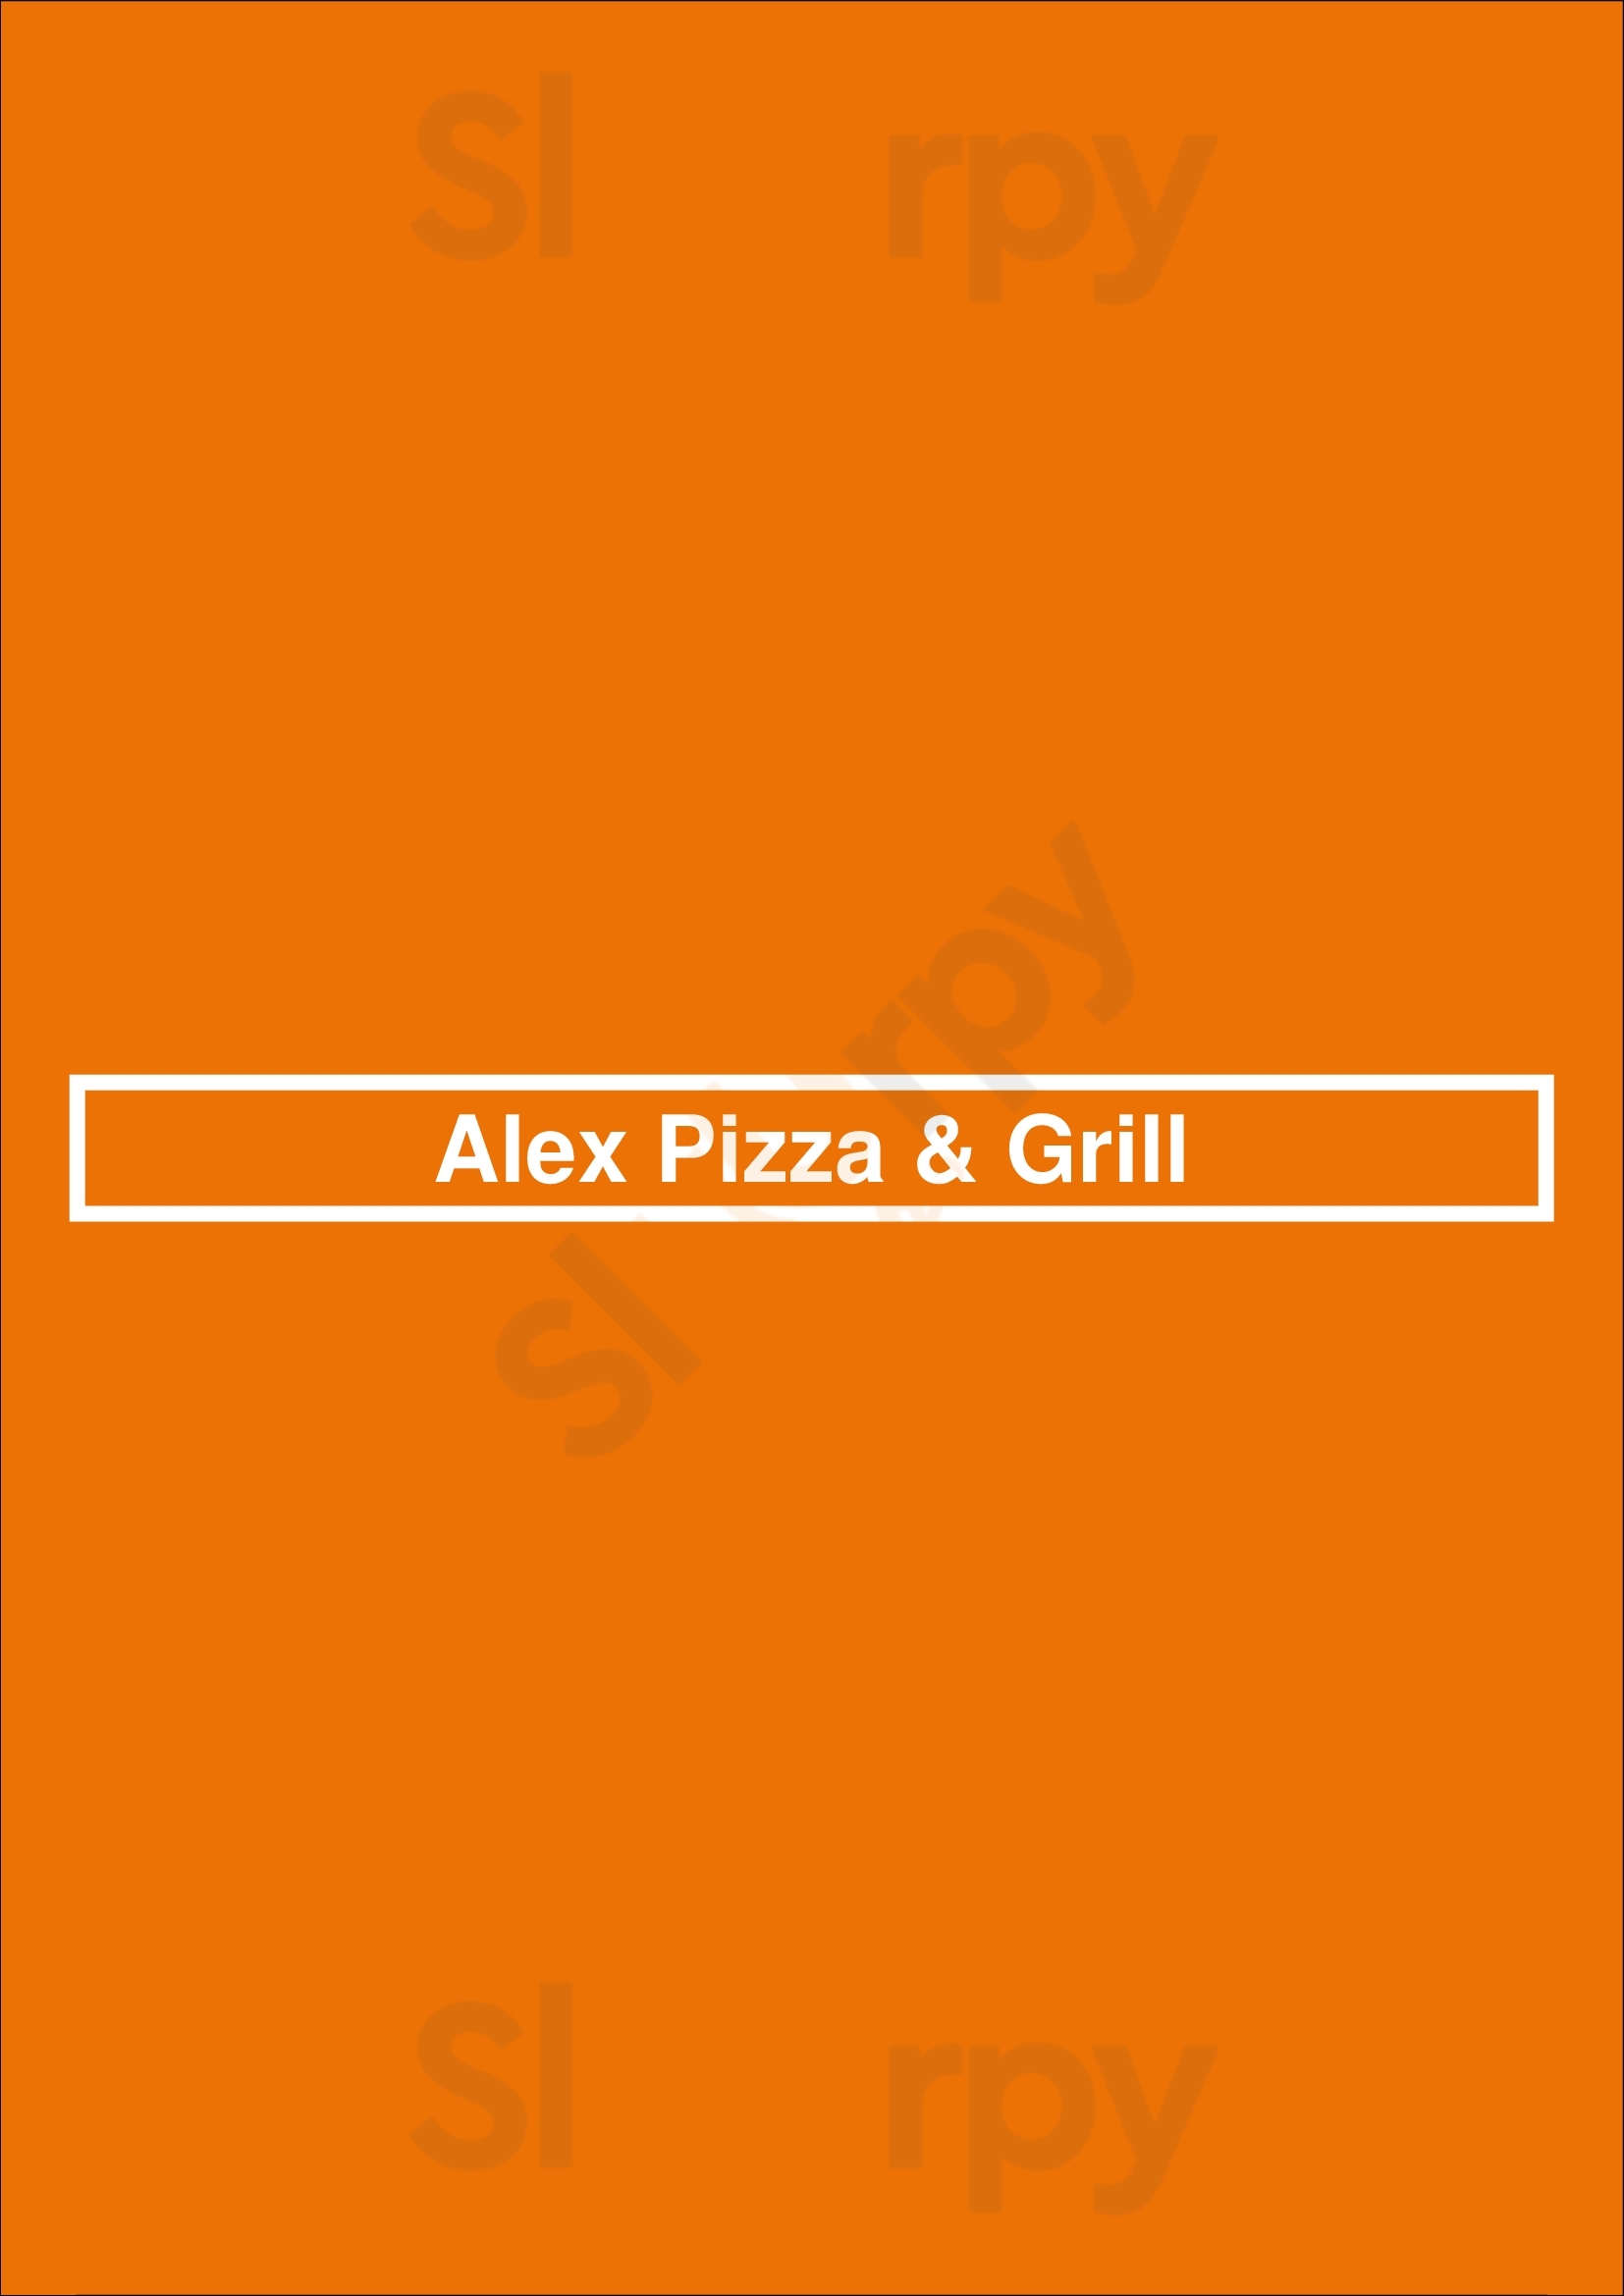 Alex Pizza & Grill Boston Menu - 1